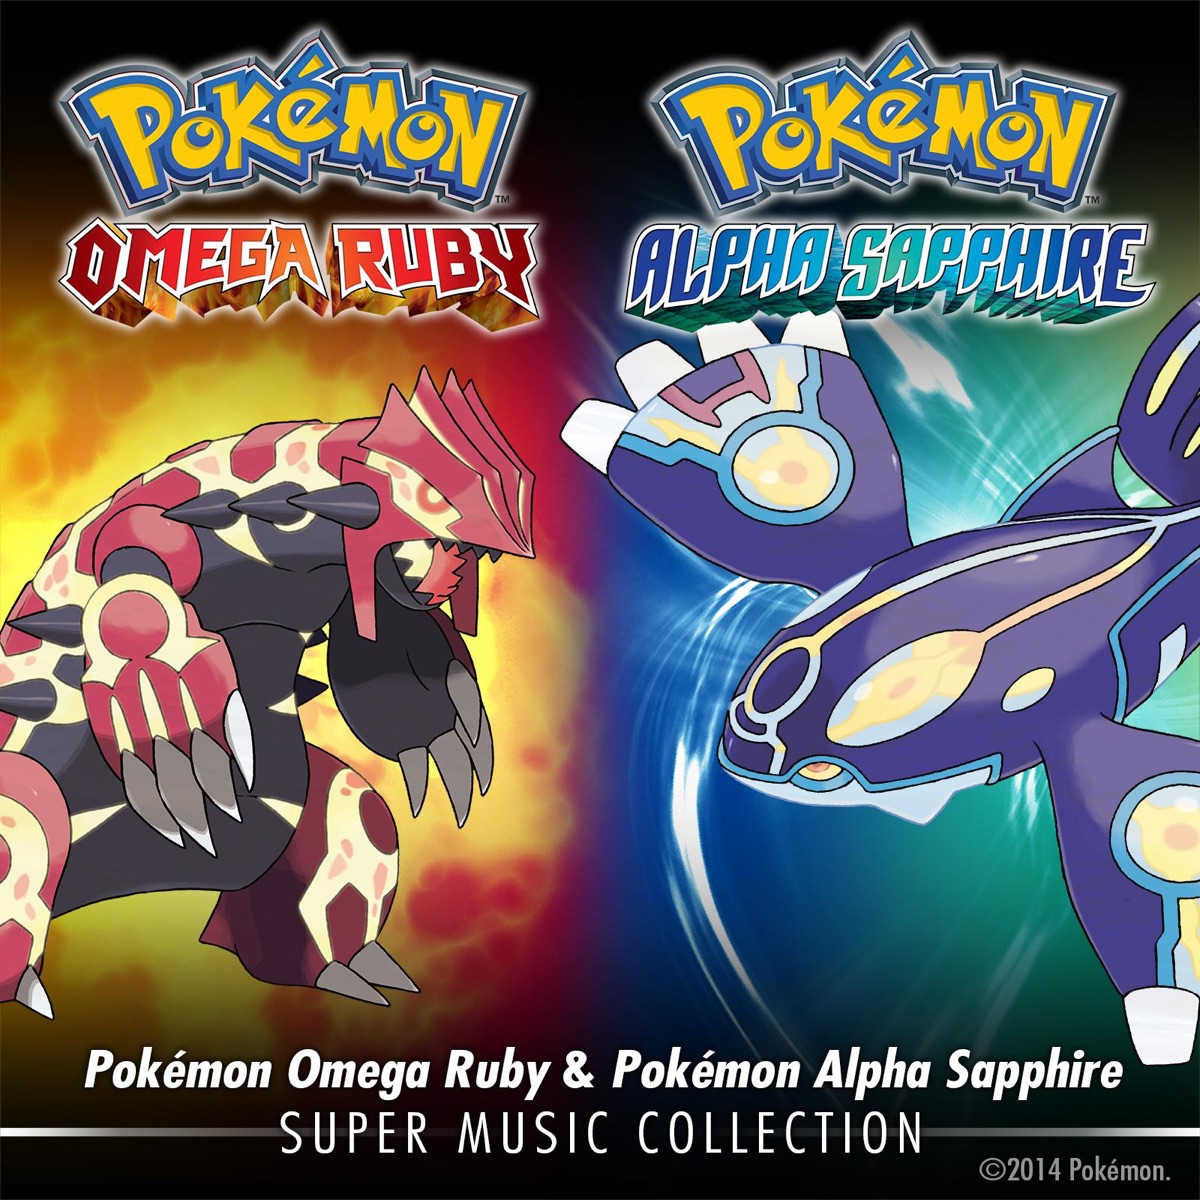 Pokedex Pokémon Omega Ruby and Pokémon Alpha Sapphire No Hoenn